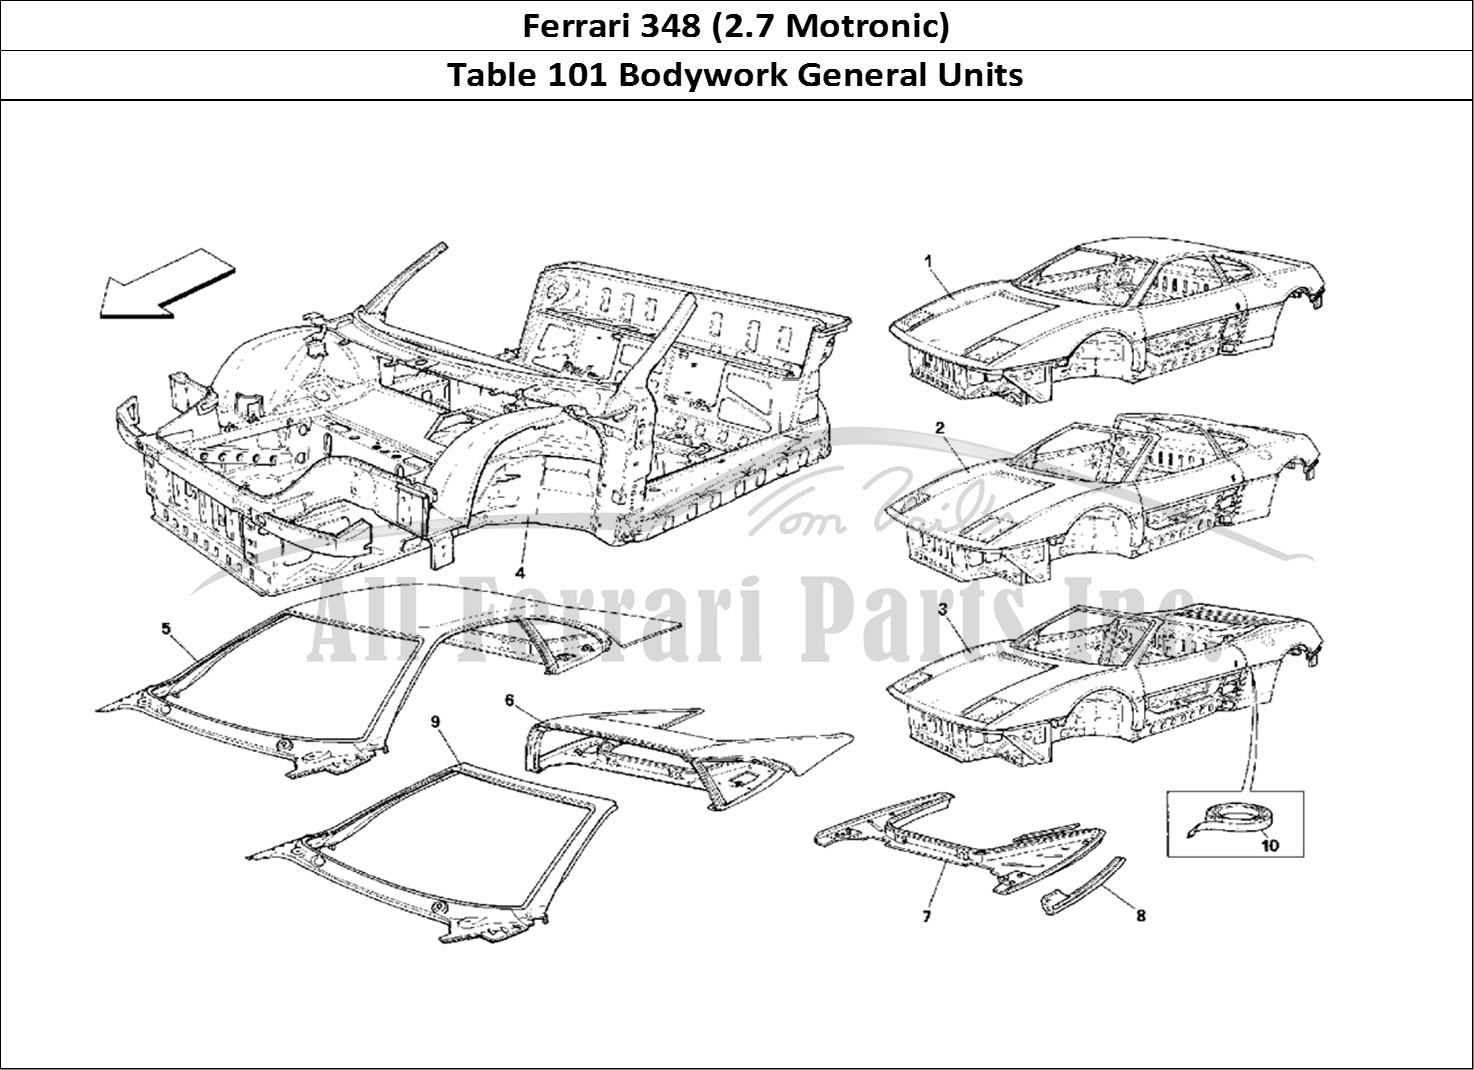 Ferrari Parts Ferrari 348 (2.7 Motronic) Page 101 Body - General Units